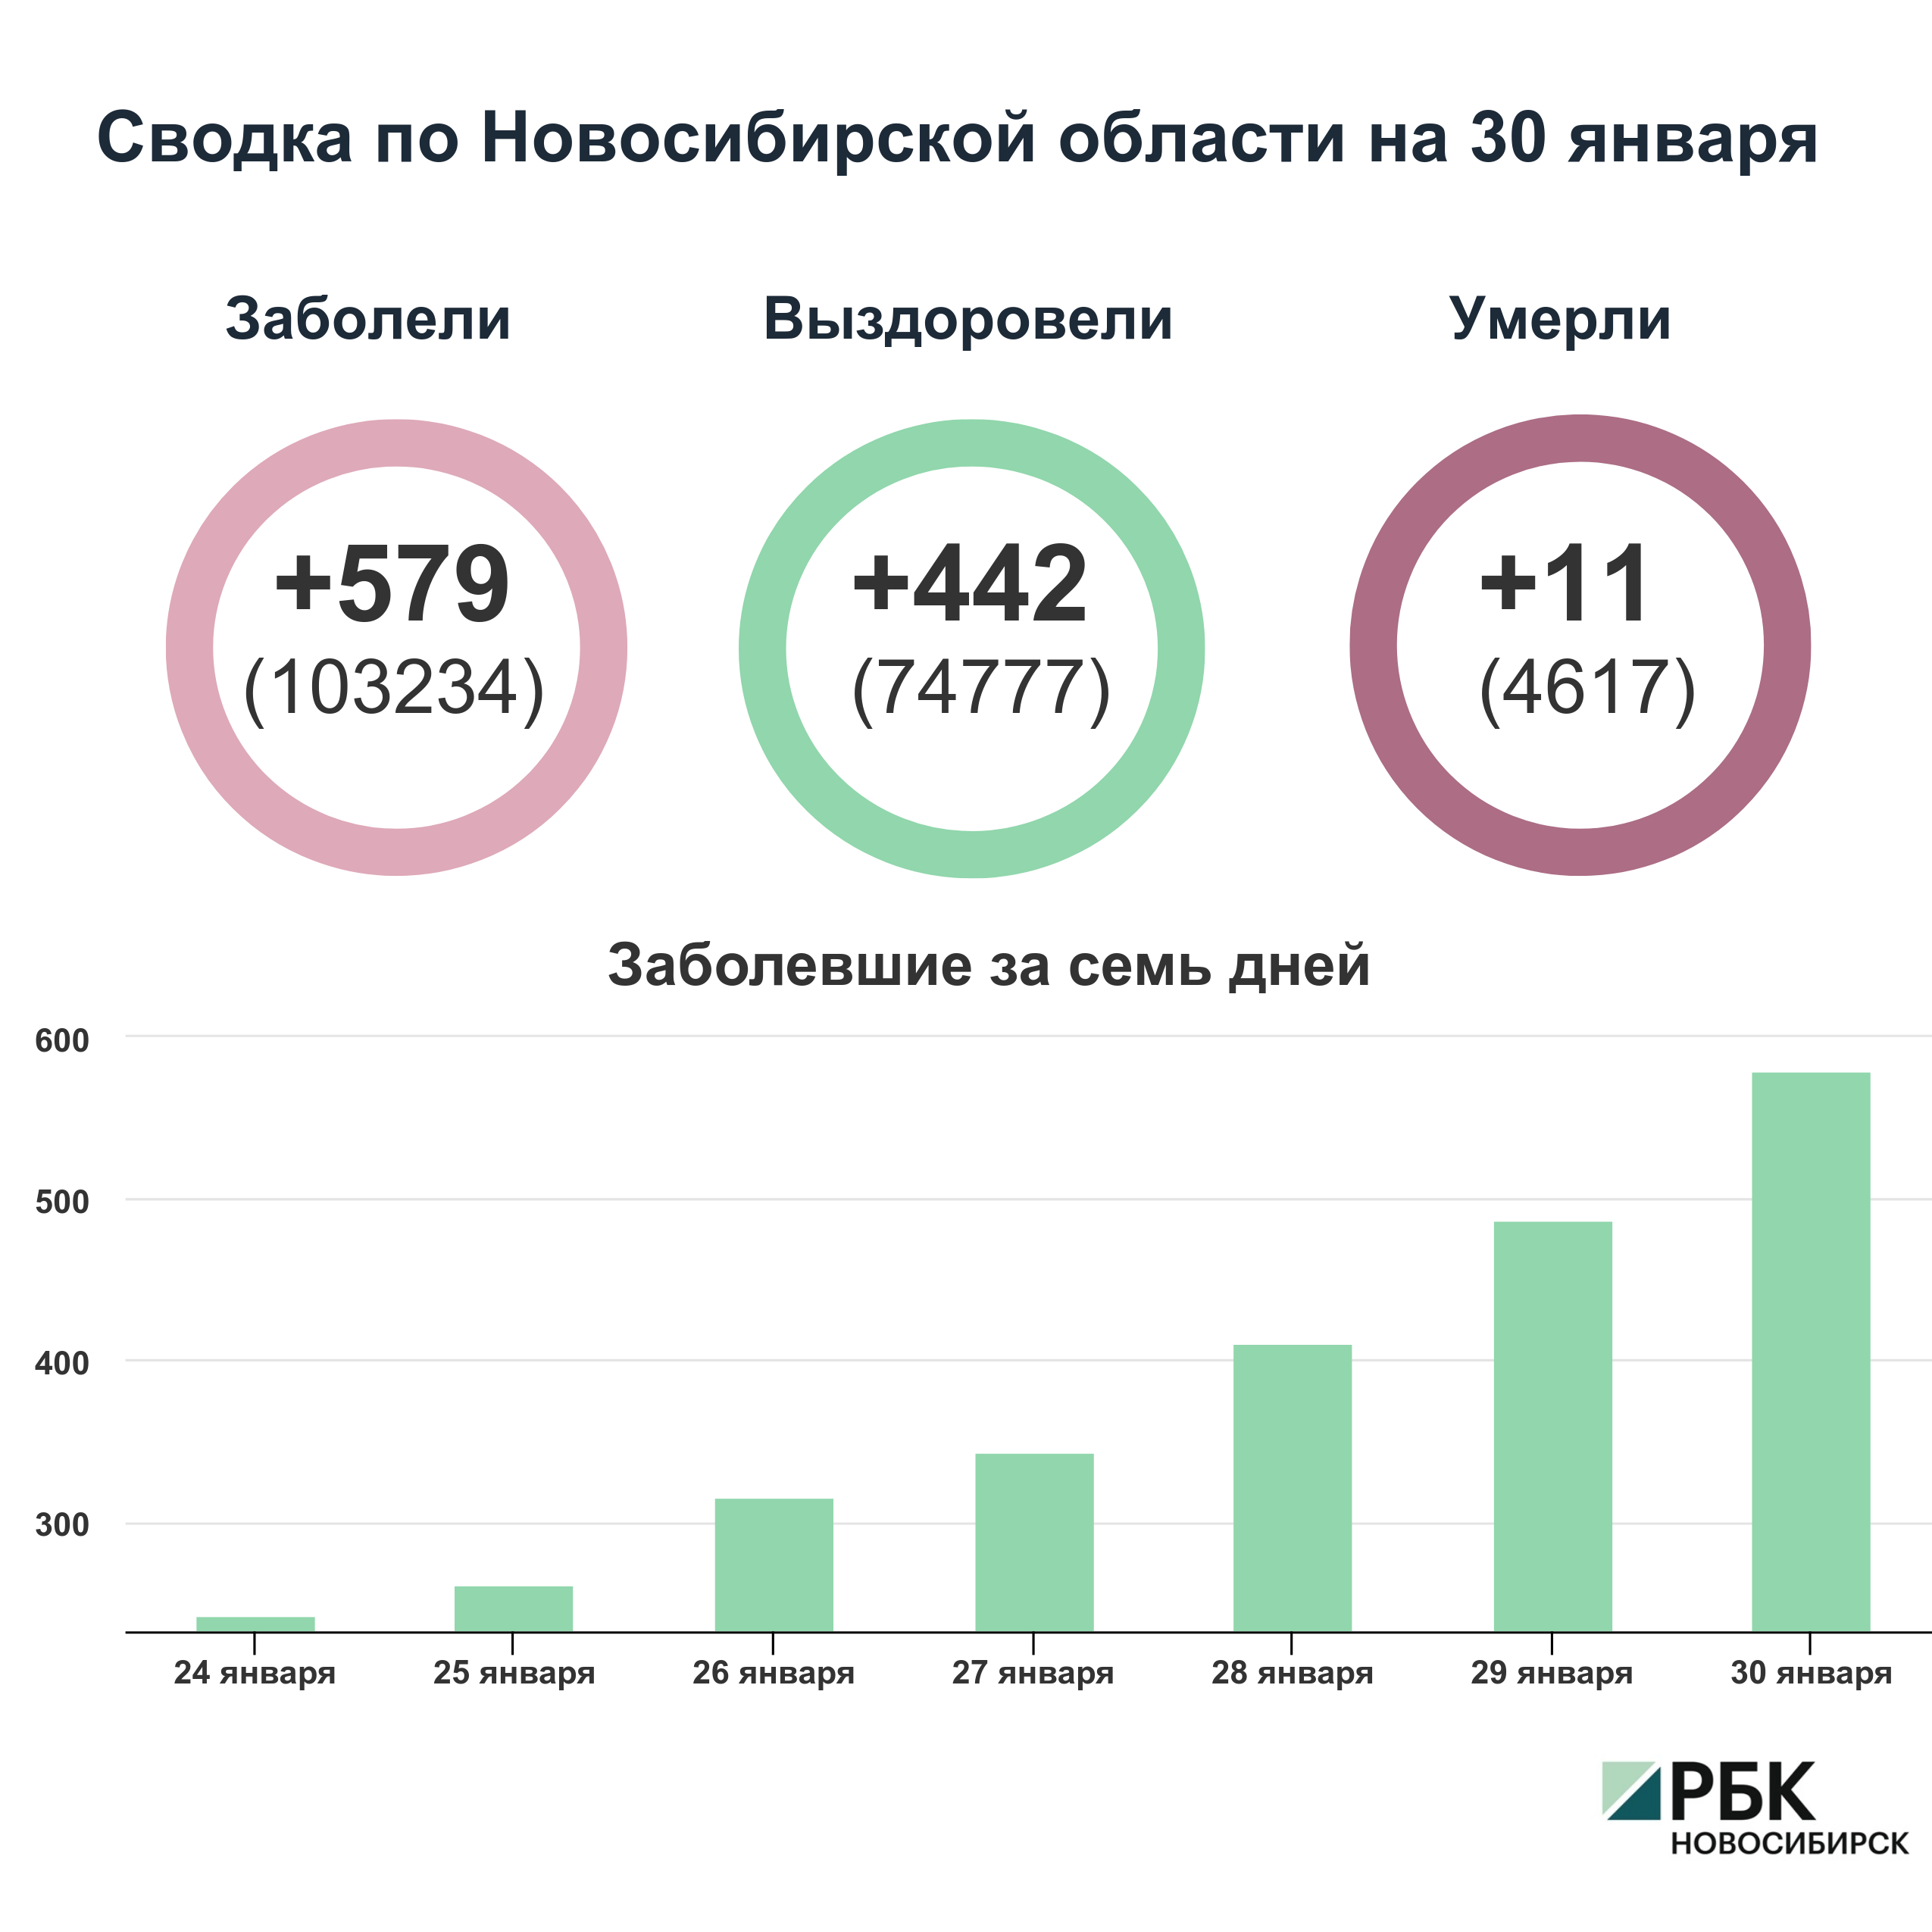 Коронавирус в Новосибирске: сводка на 30 января